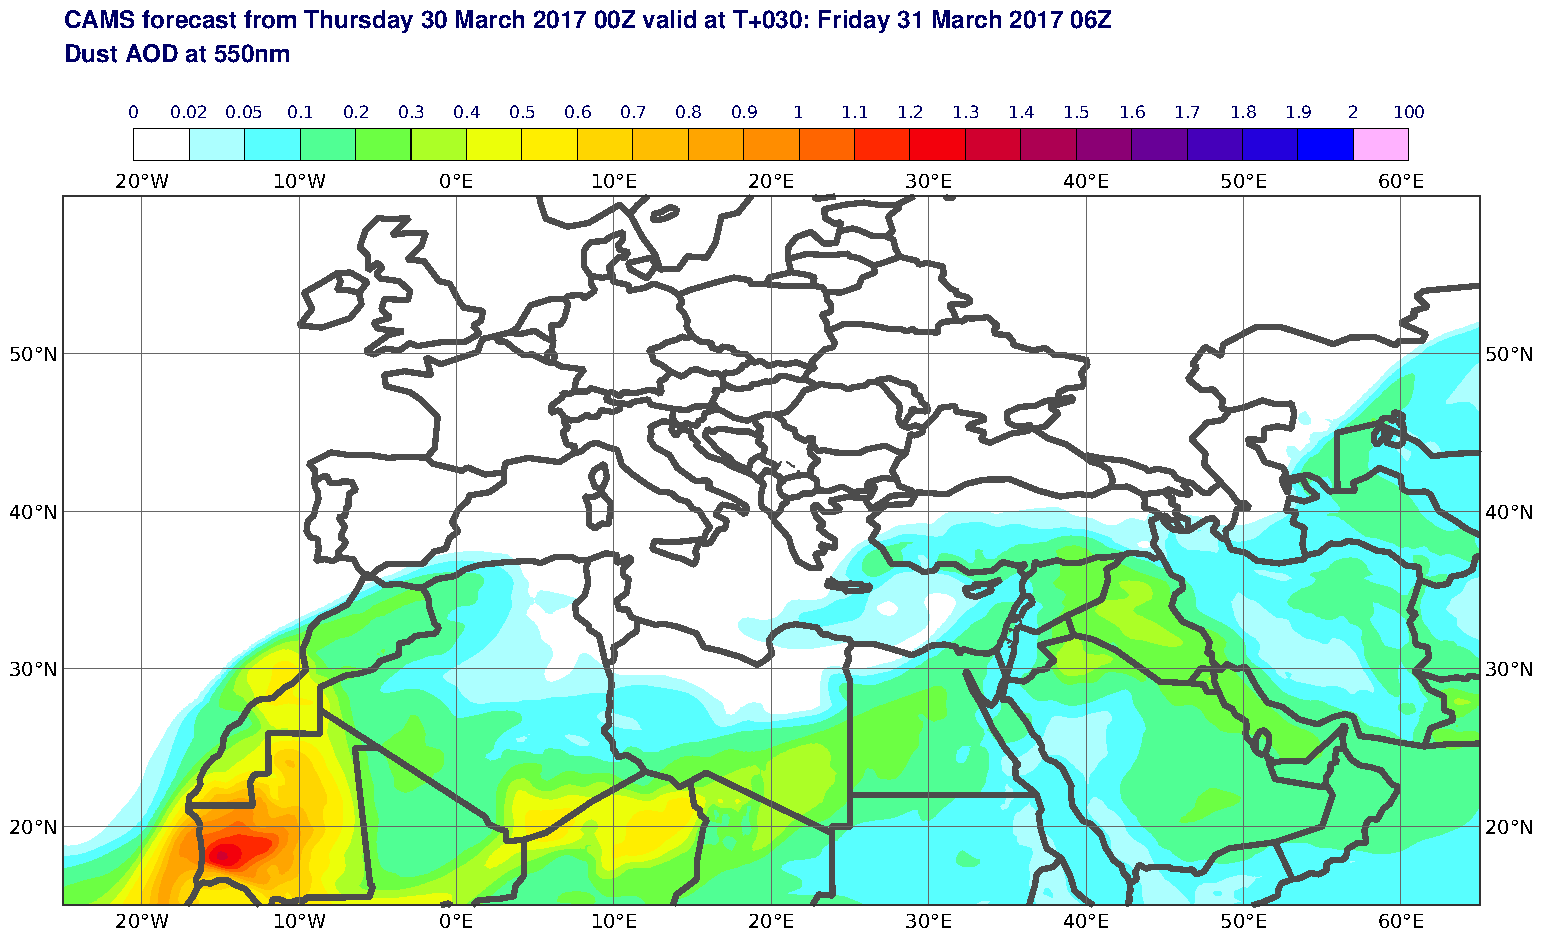 Dust AOD at 550nm valid at T30 - 2017-03-31 06:00